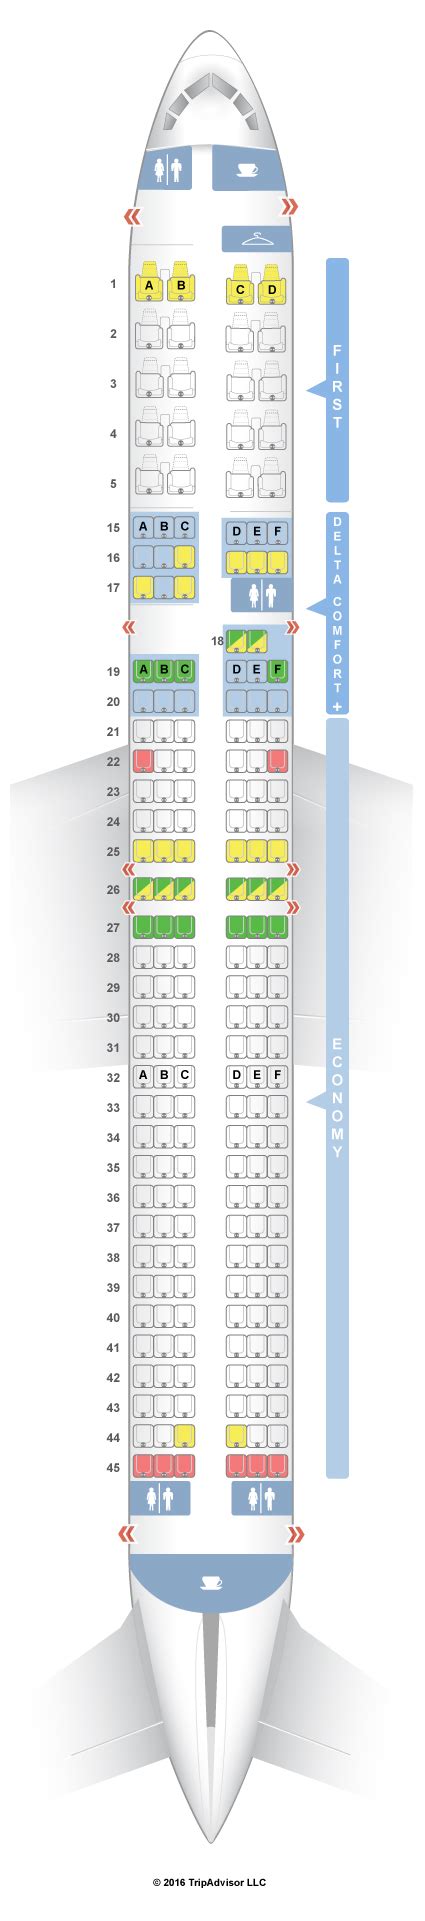 SeatGuru's sortable Comparison Charts help you compare seating